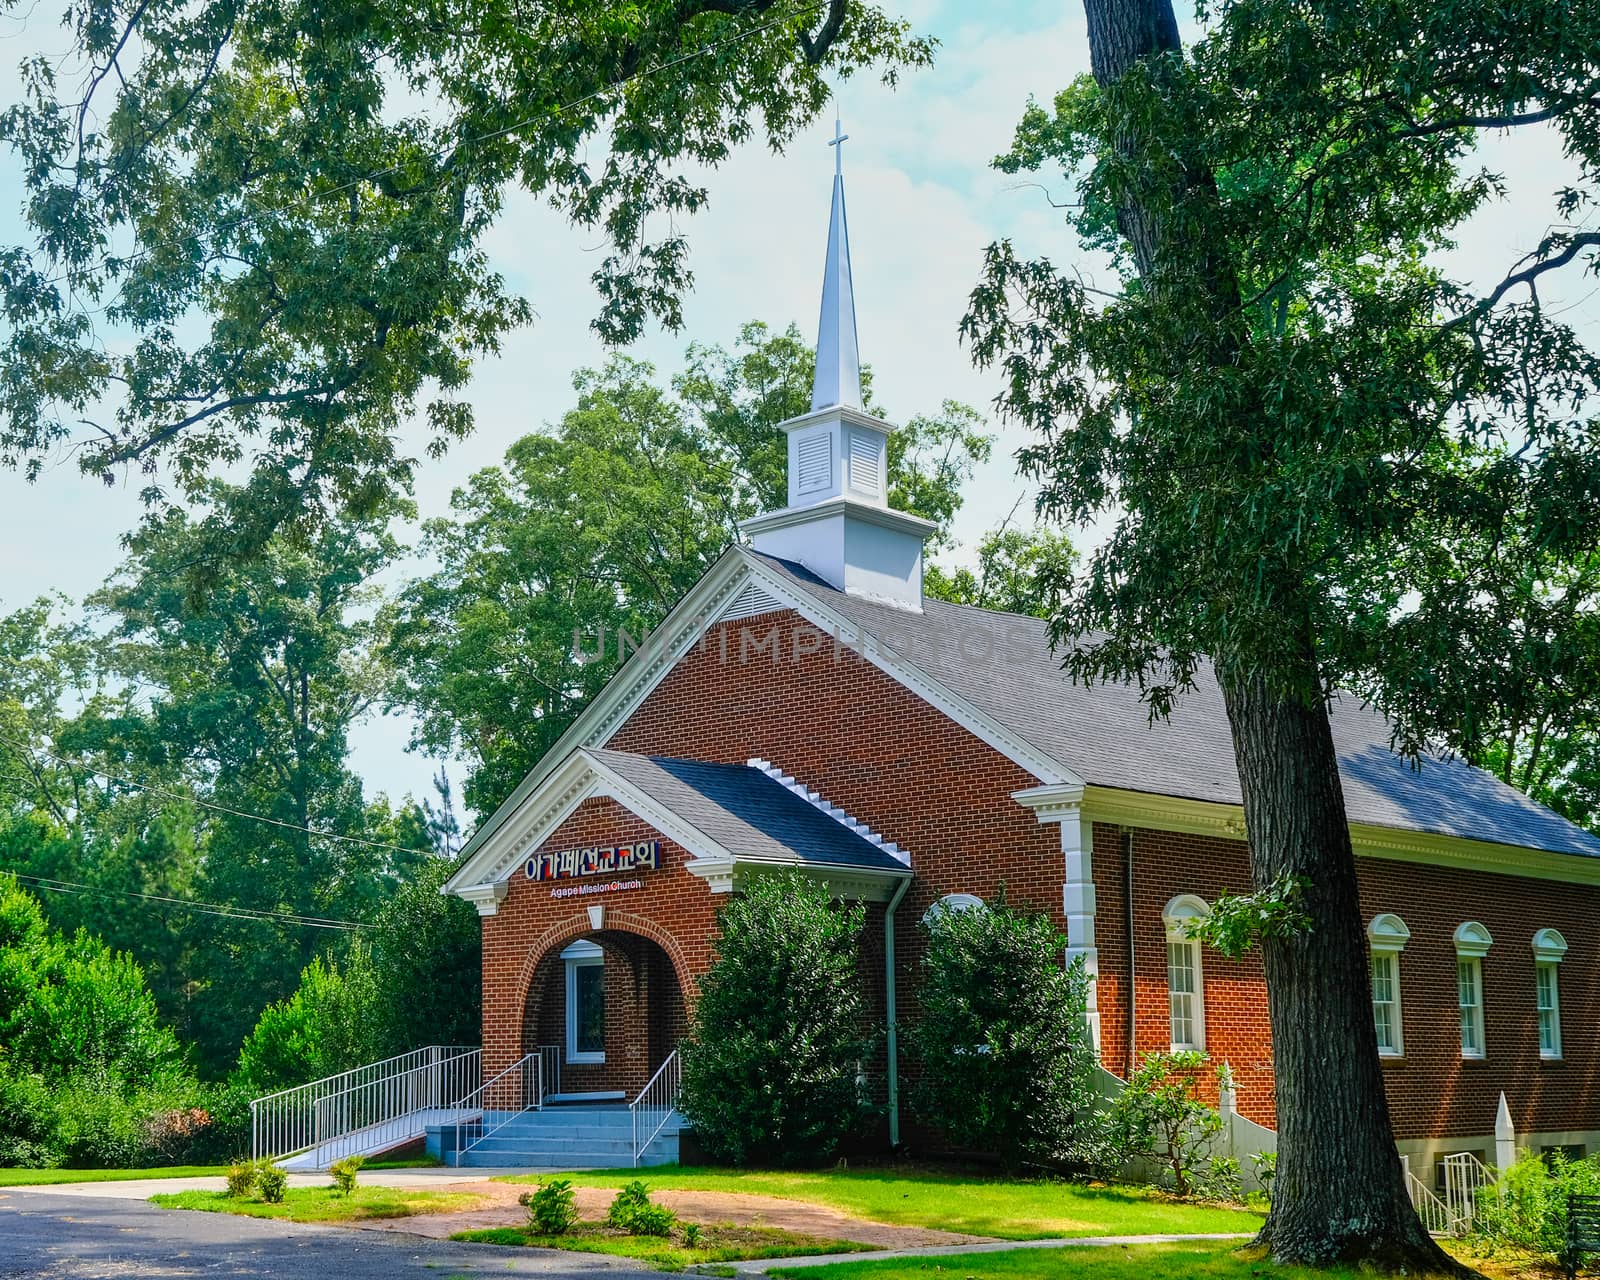 CUMMING, GEORGIA - July 21, 2020: The Agape Mission Church is an evangelical church that serves the Korean community